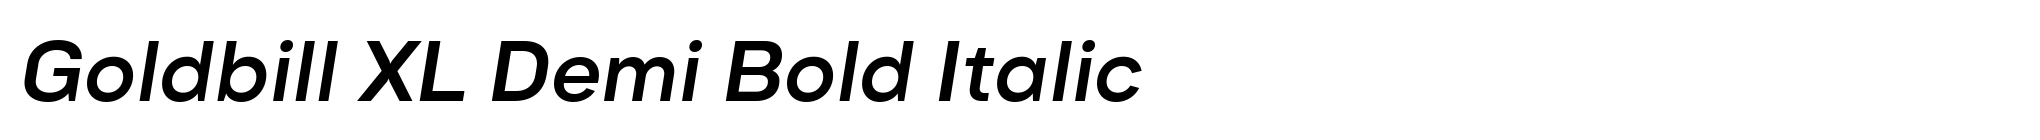 Goldbill XL Demi Bold Italic image